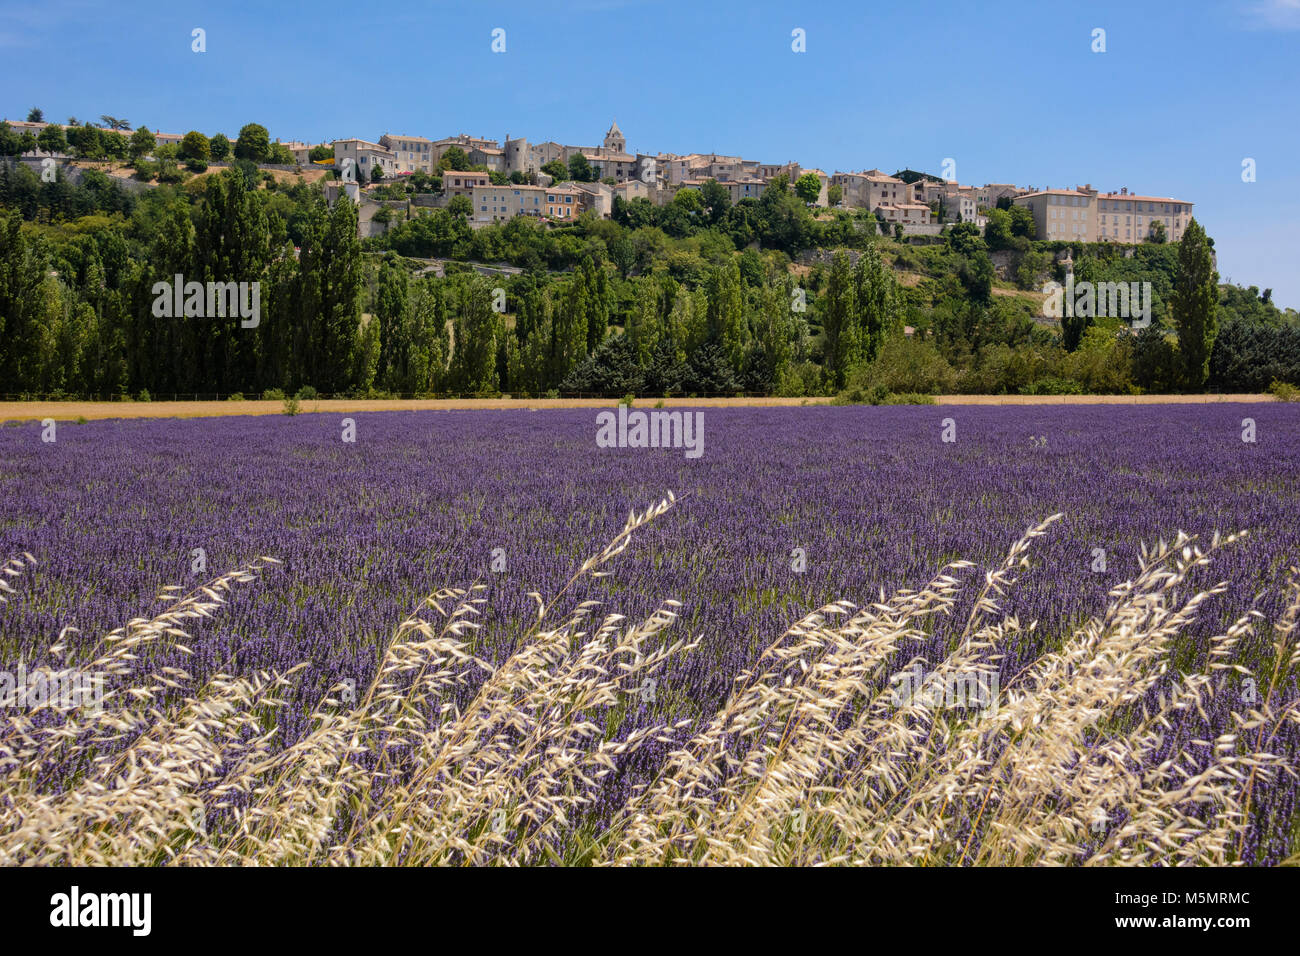 Lavendelfeld bei Sault, Provence, Frankreich, Europa Banque D'Images